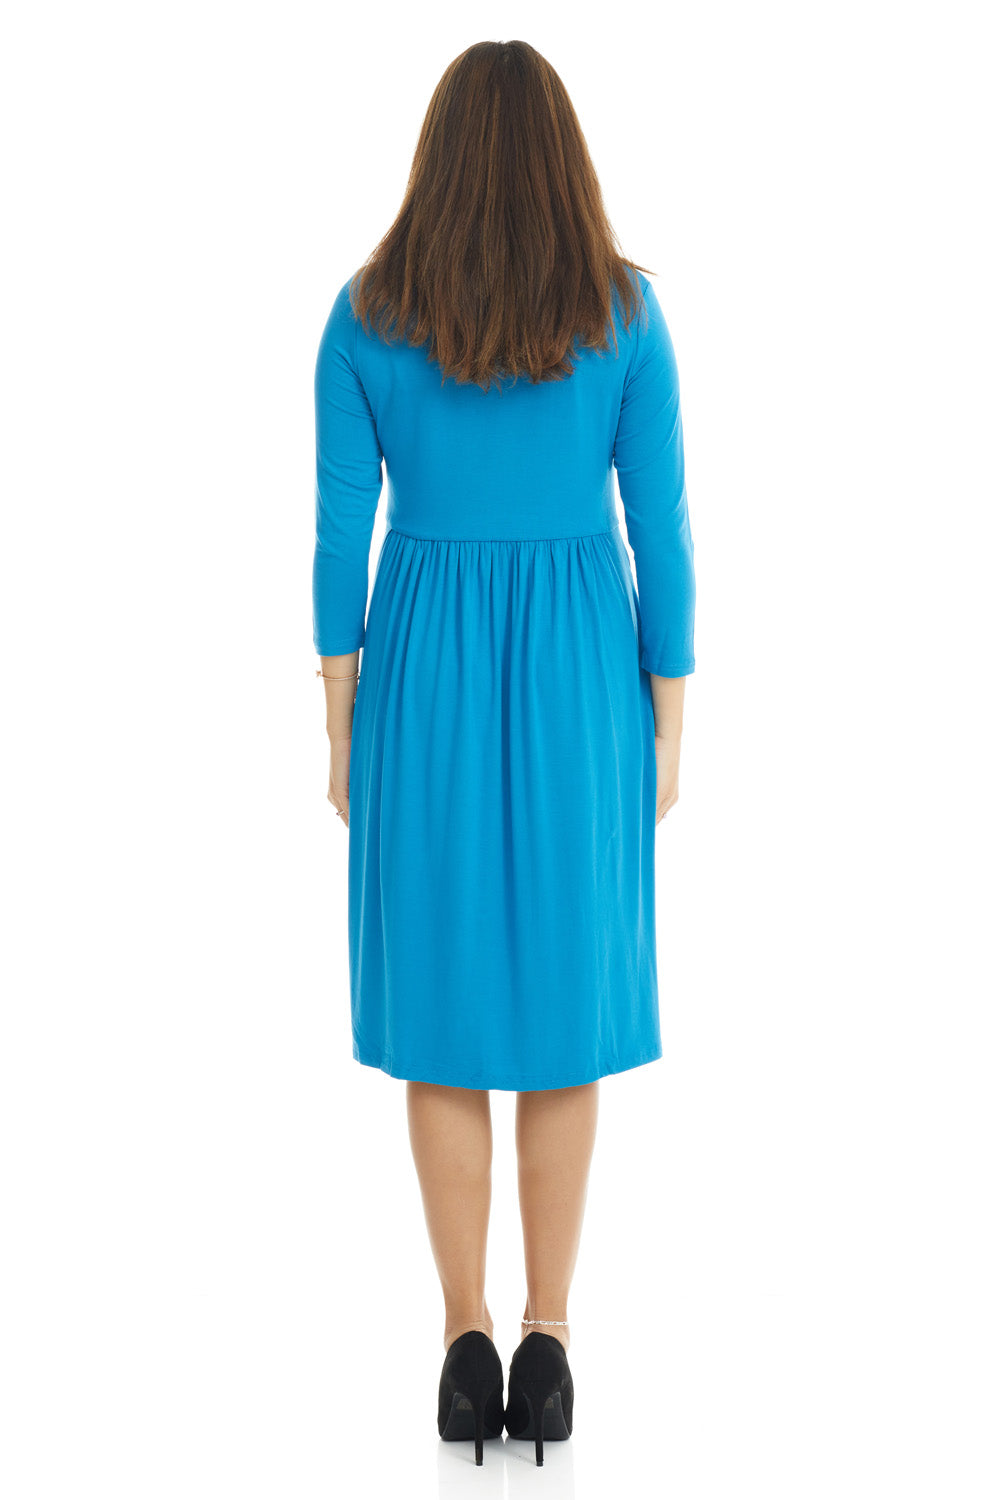 tznius 3/4 sleeve below the knee plus size swing dress with pockets